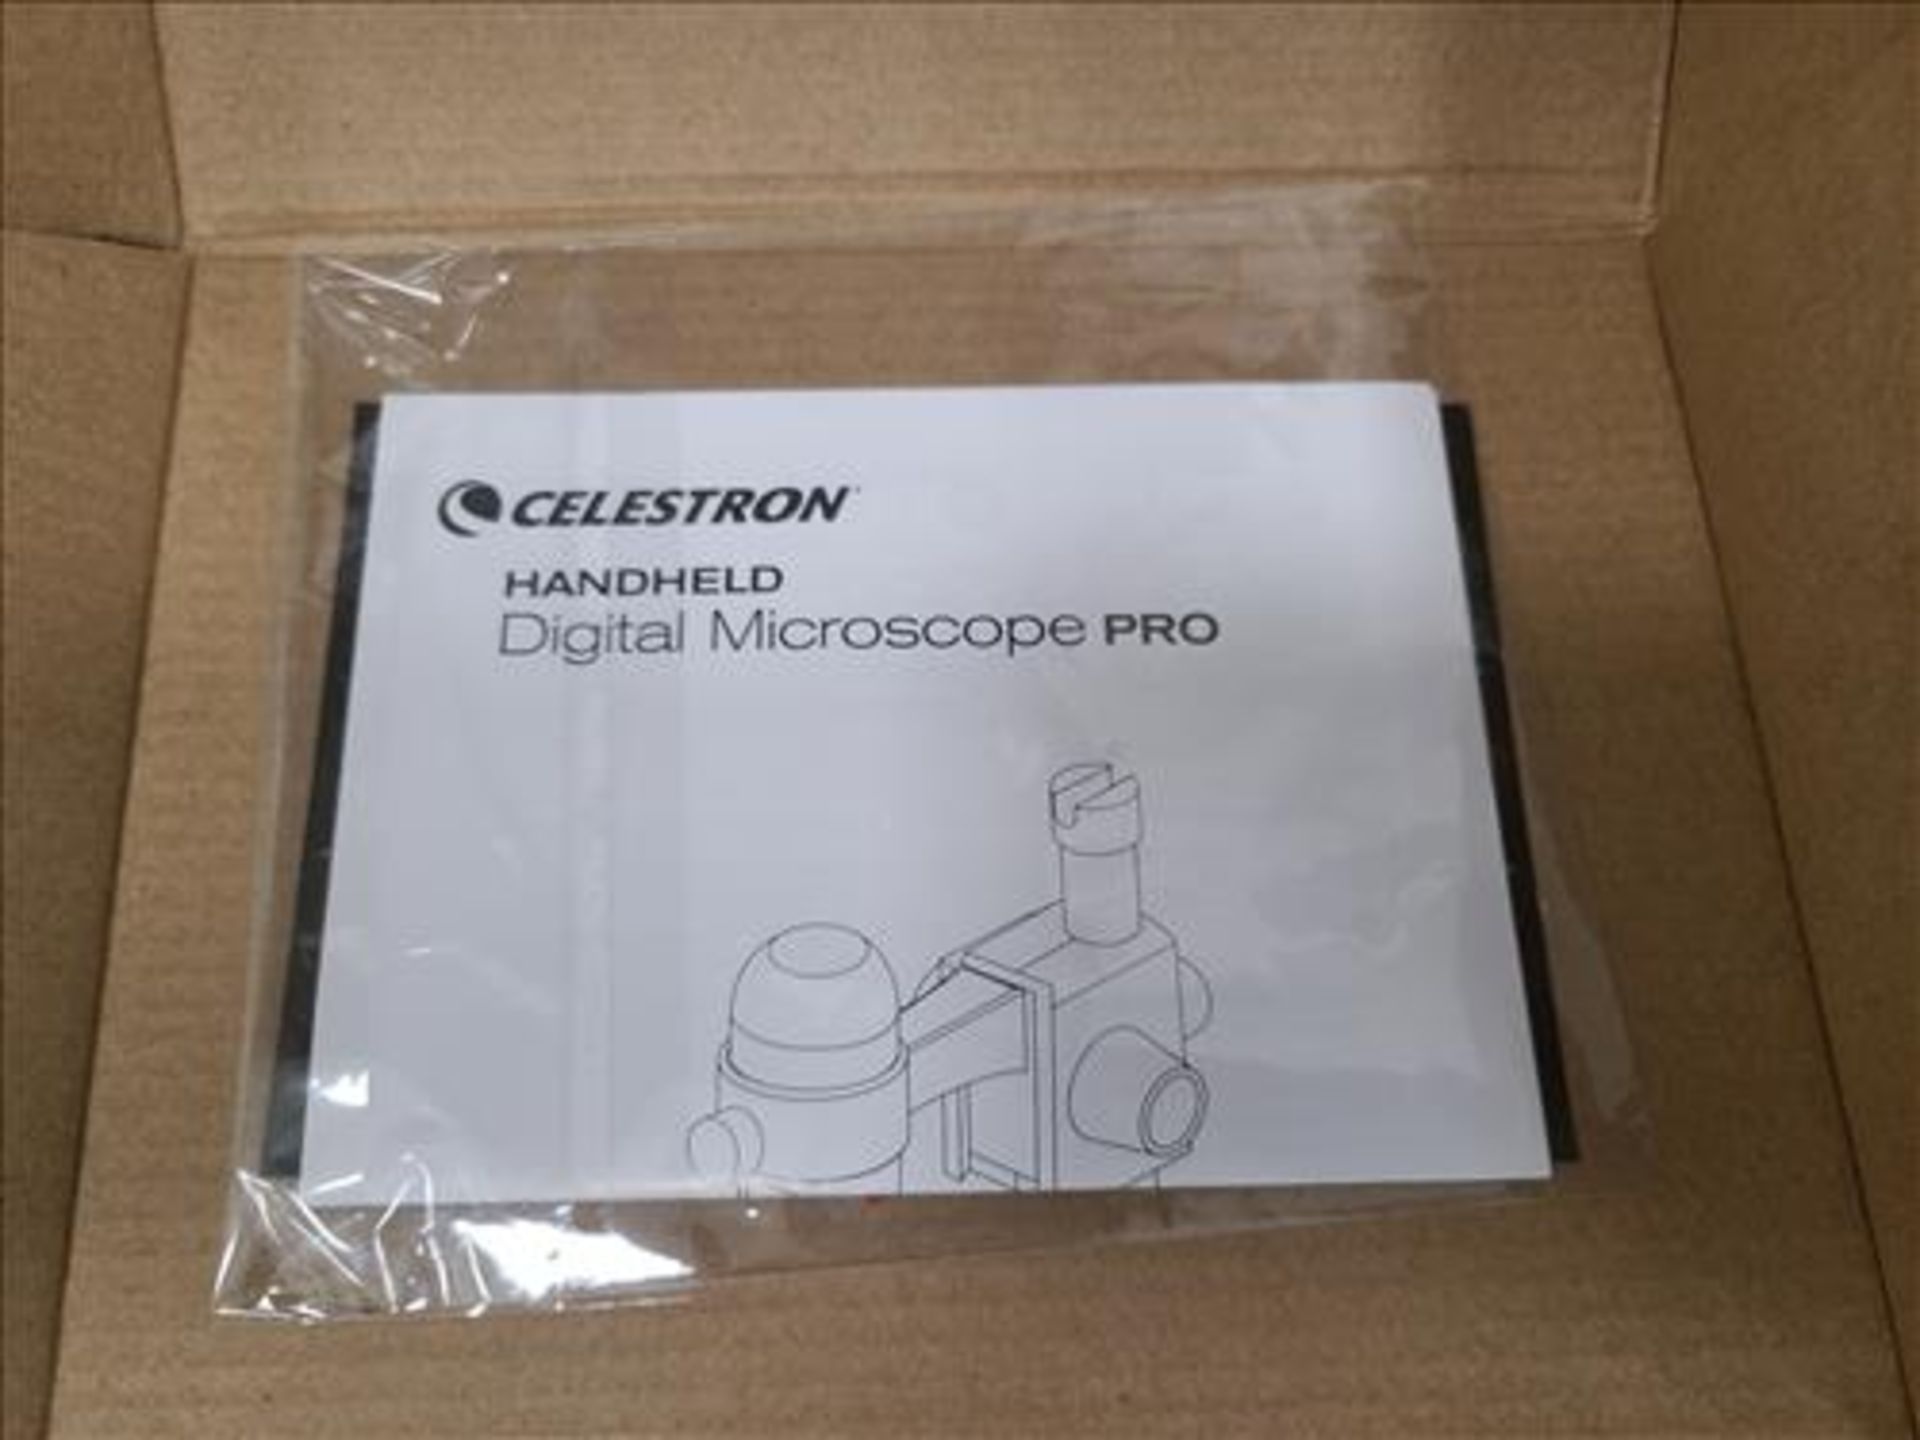 Celestron handheld digital microscope [Loc. Packaging 1, Lab] - Image 3 of 3